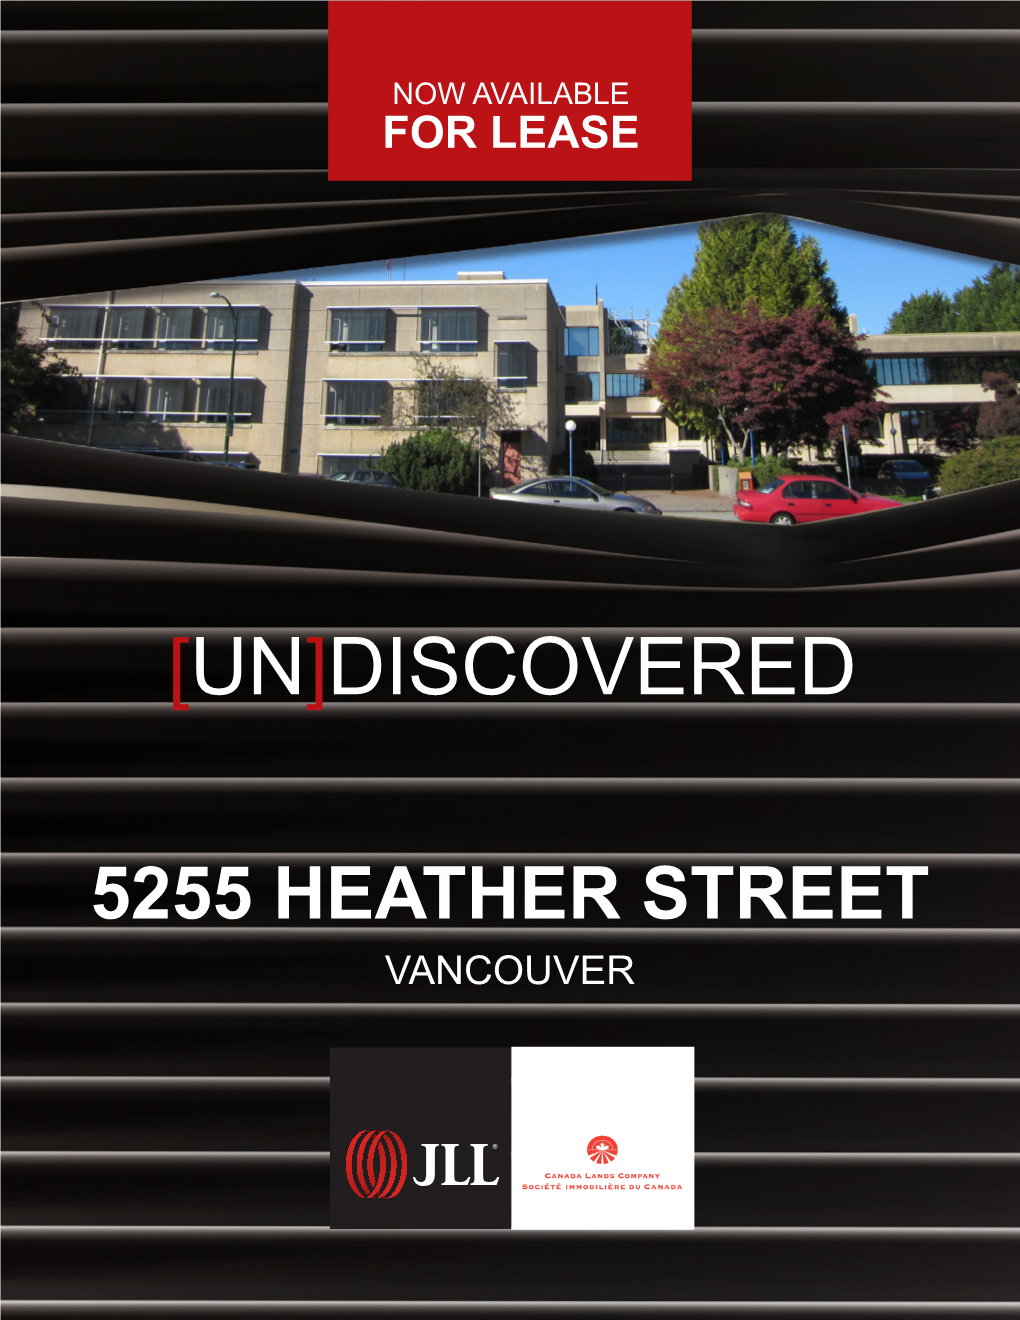 5255 HEATHER STREET VANCOUVER 5255 Heather Street